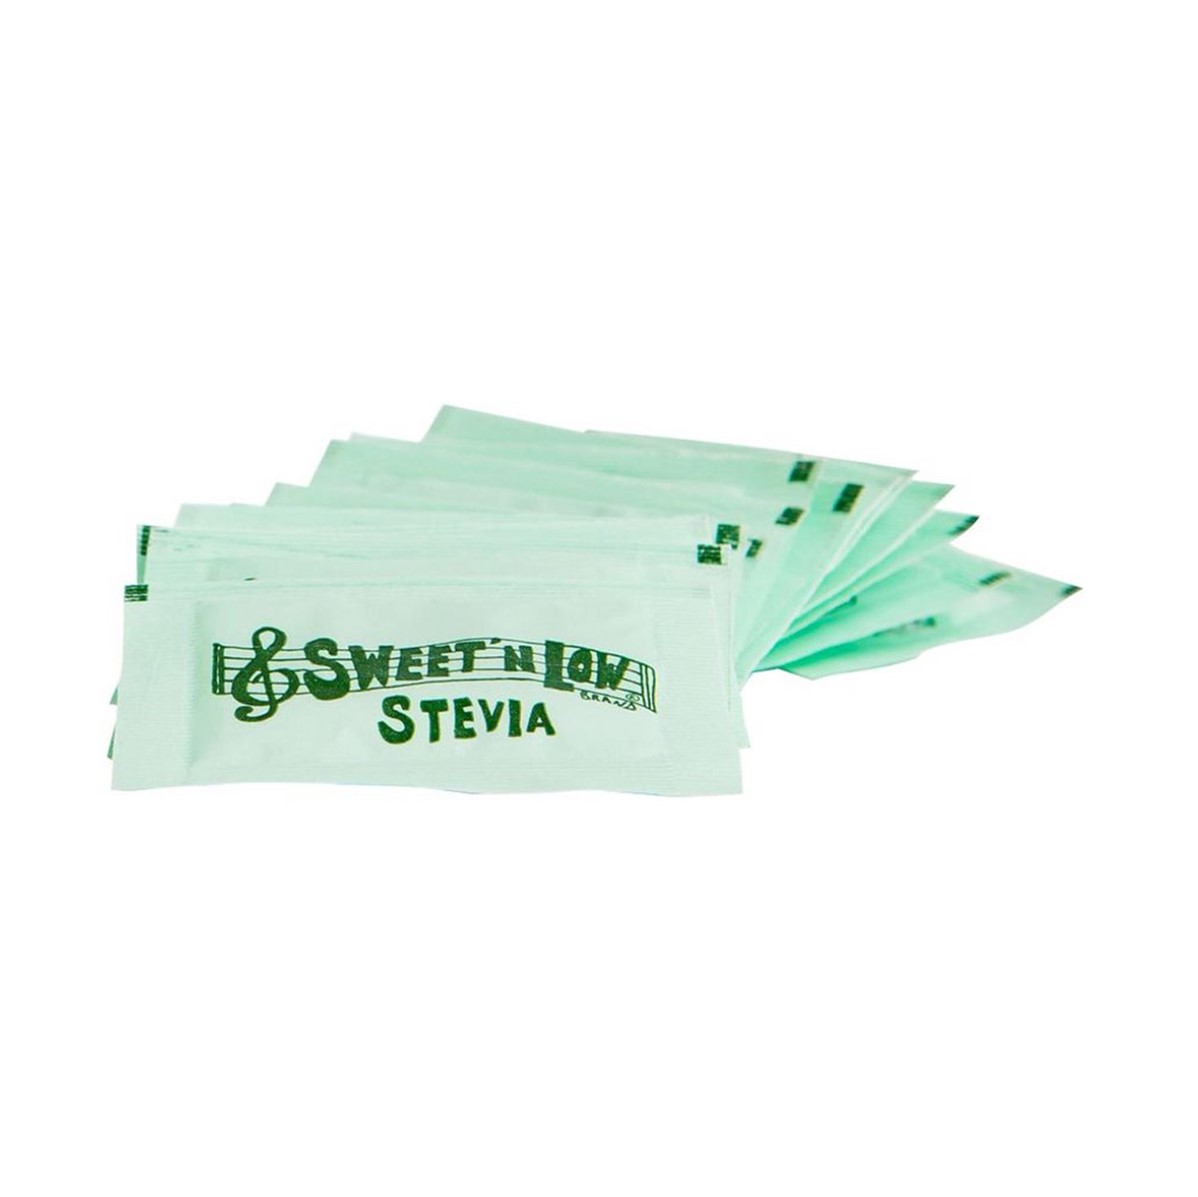 Stevia Sweetener - 1,000x0.4g sticks